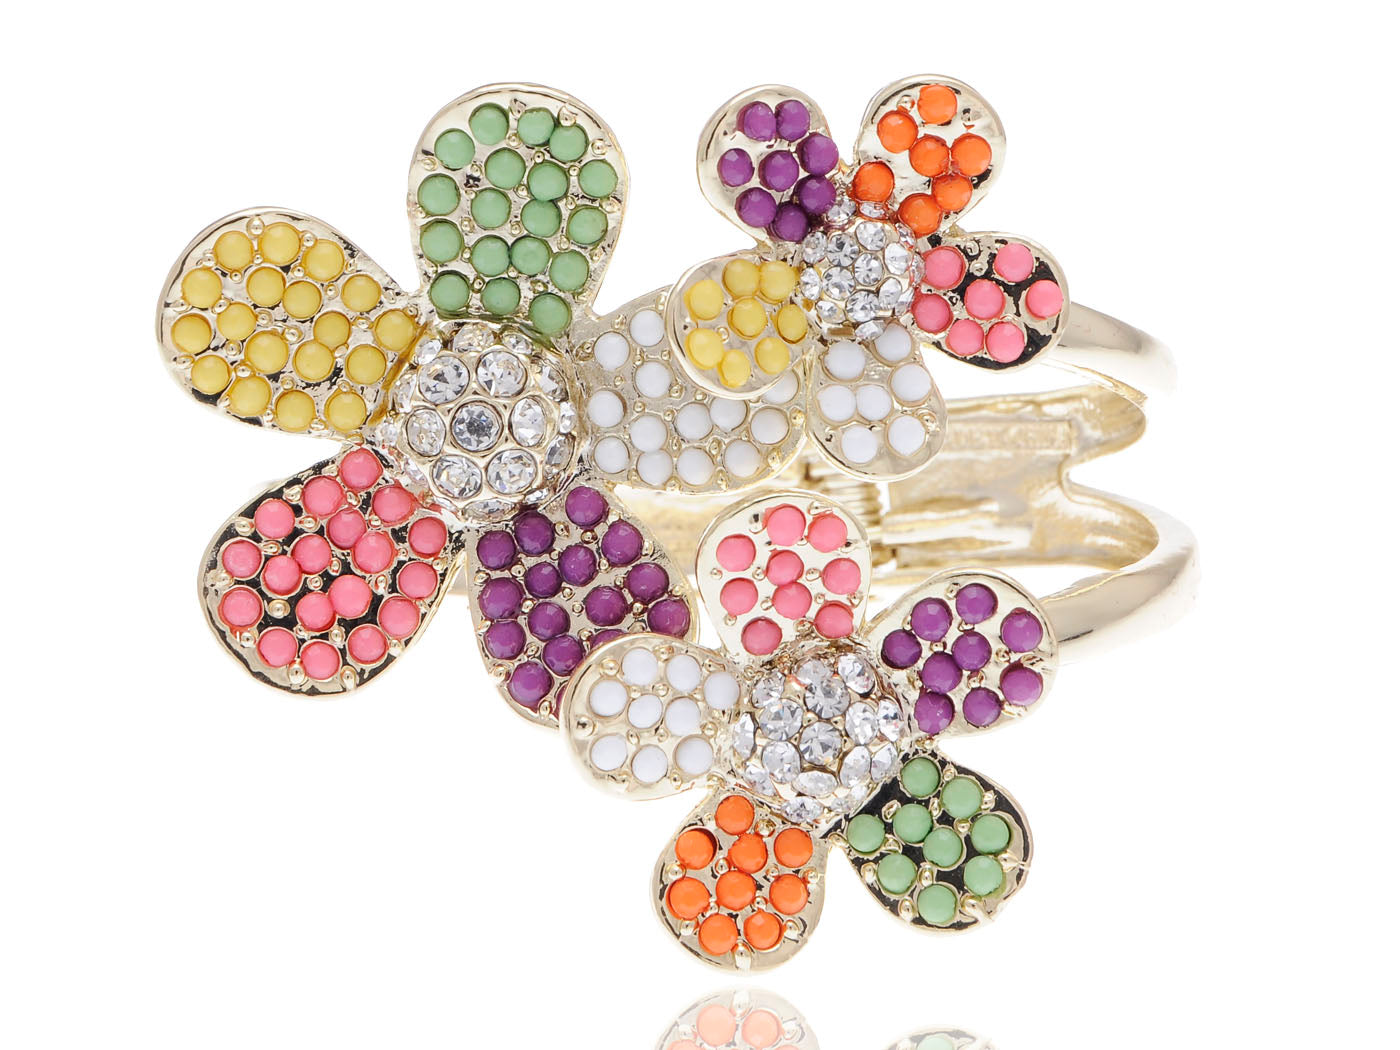 Colorful Encrusted Bead Stigma Flower Bracelet